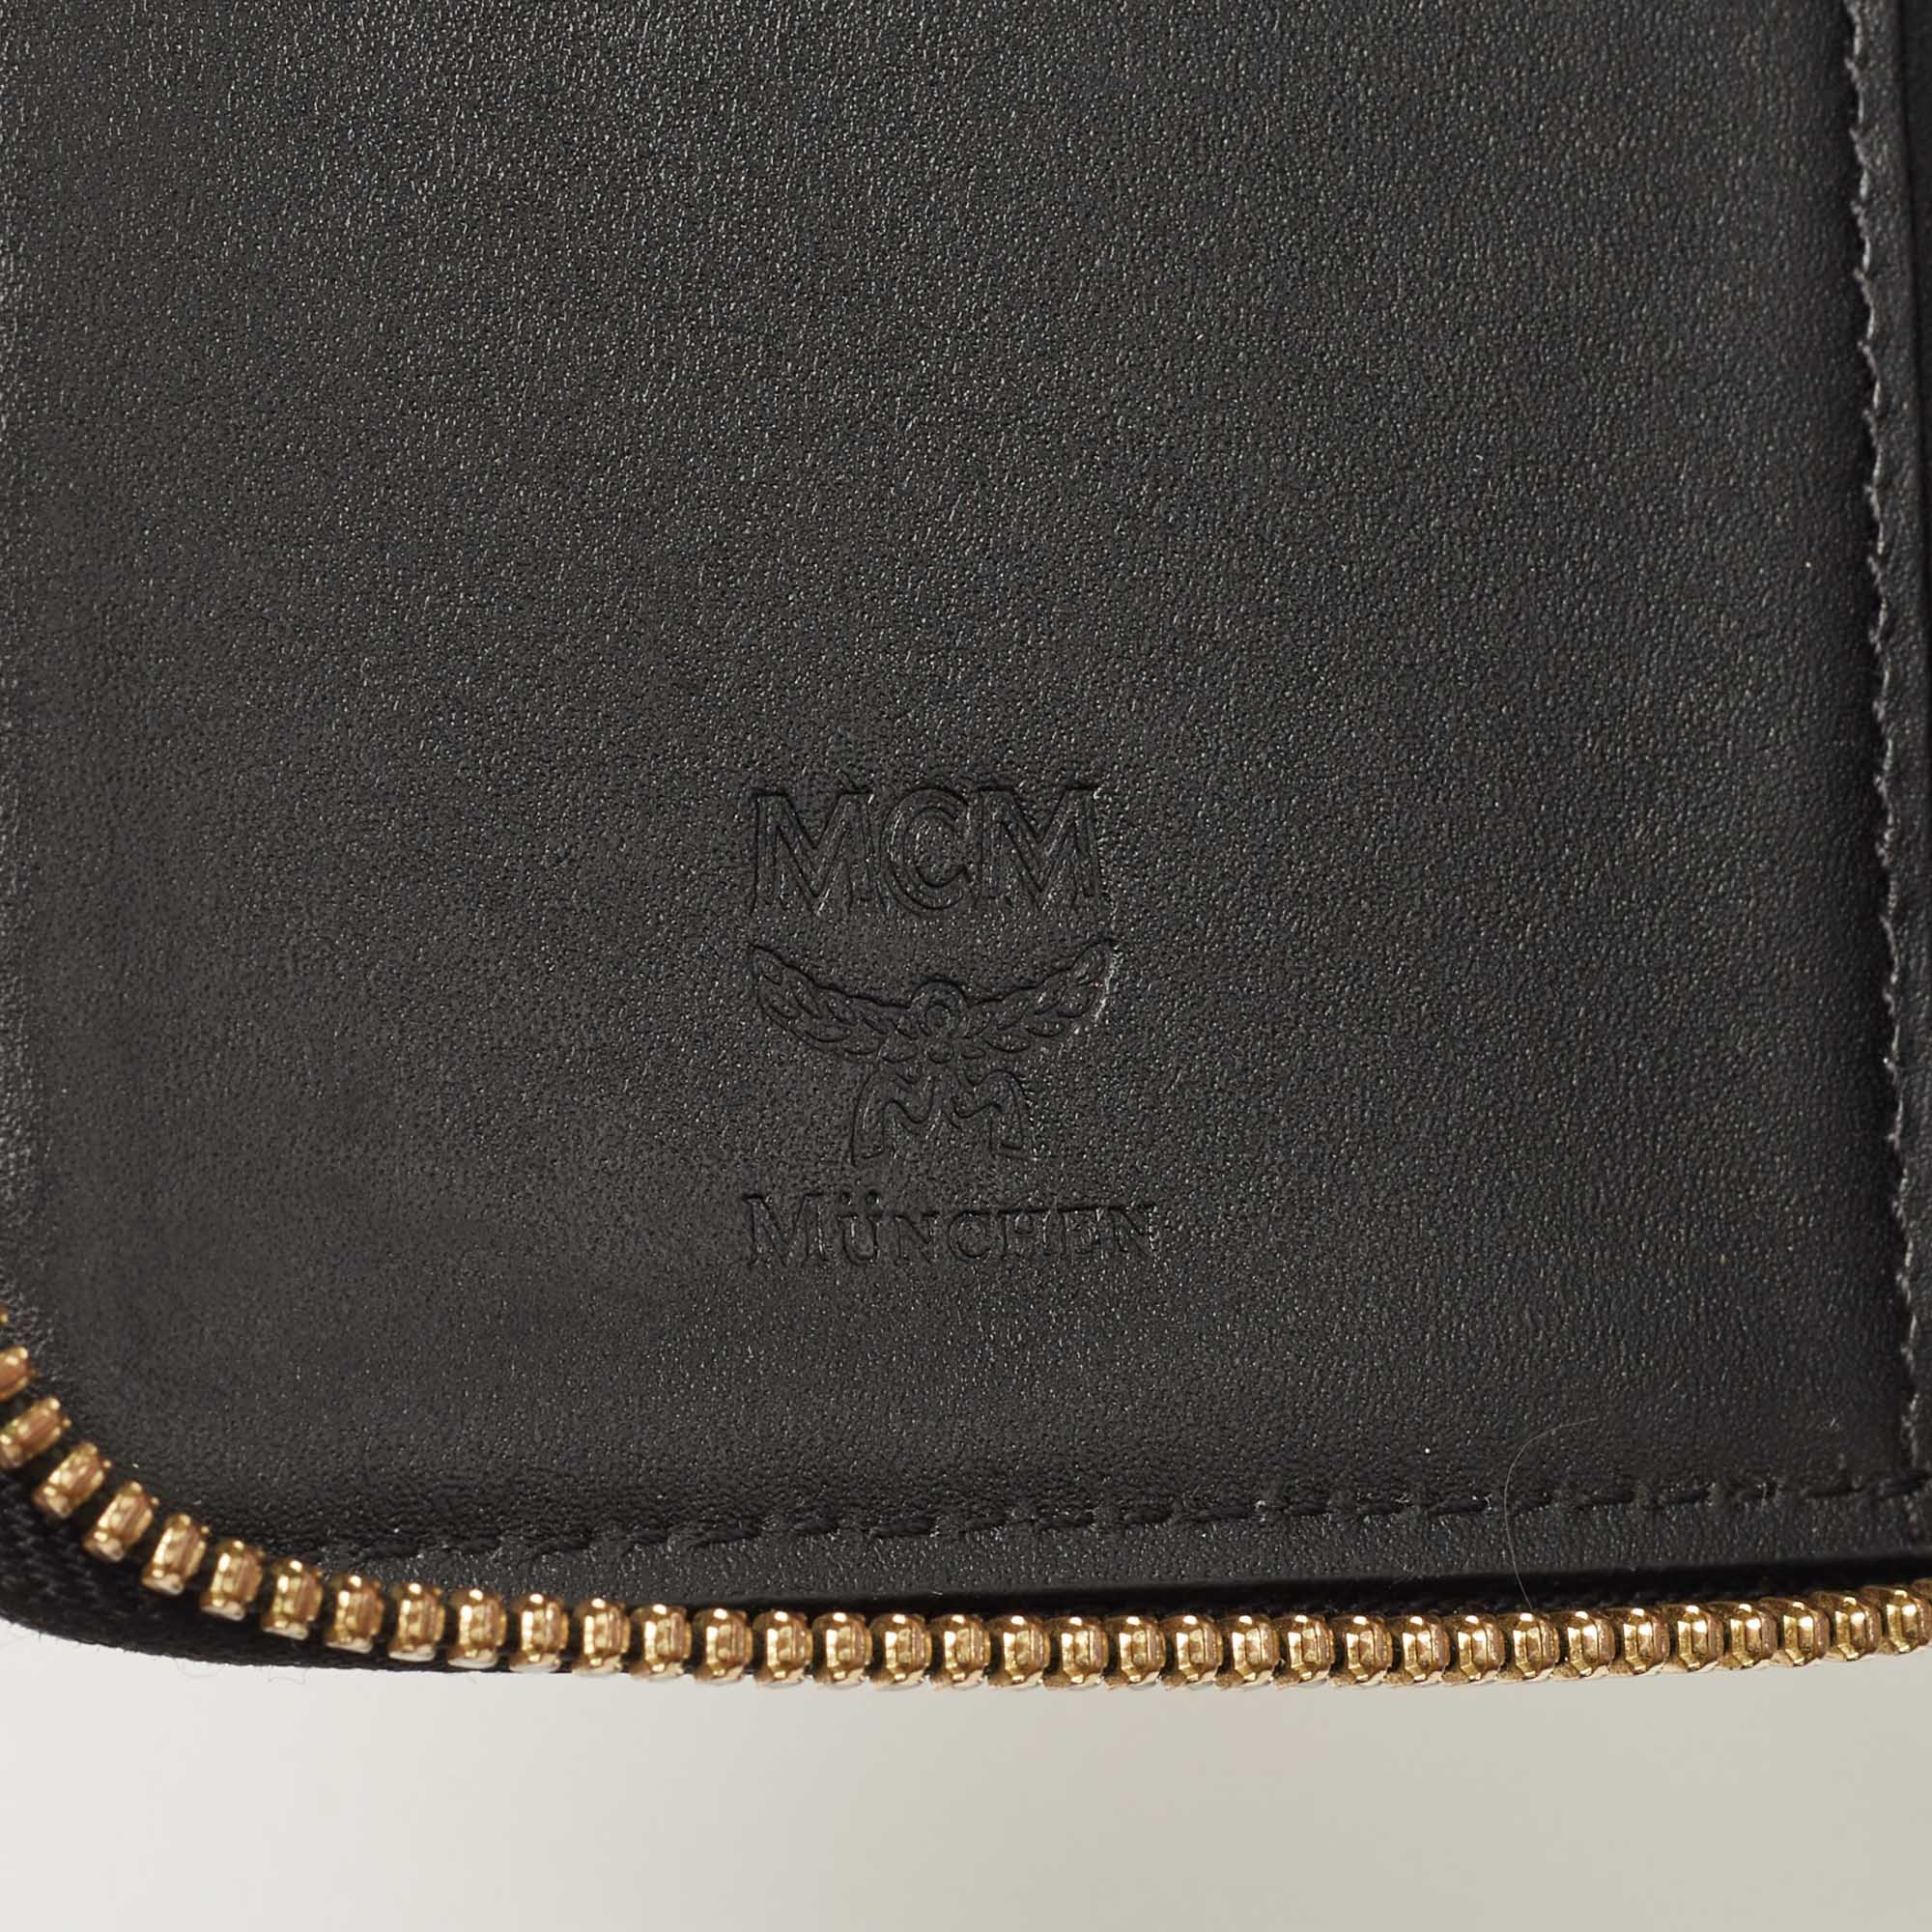 MCM Black/White Visetos Leather Zip Around Wallet